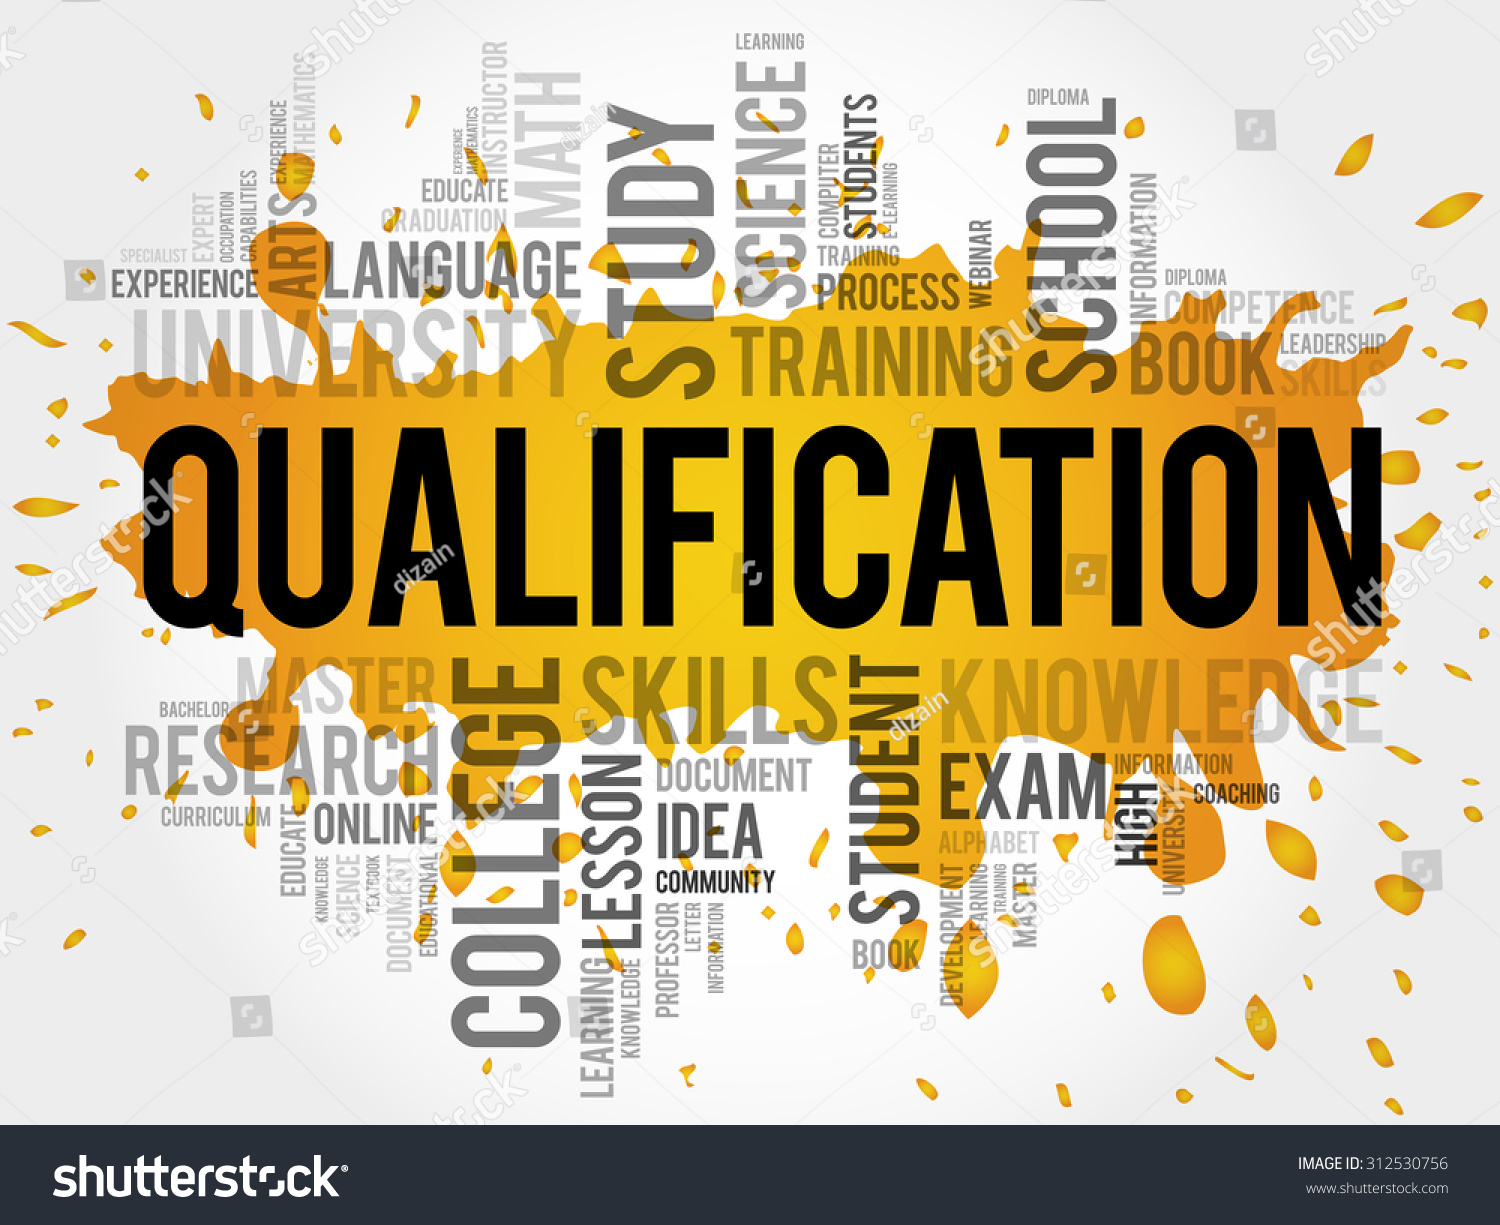 Image result for qualification